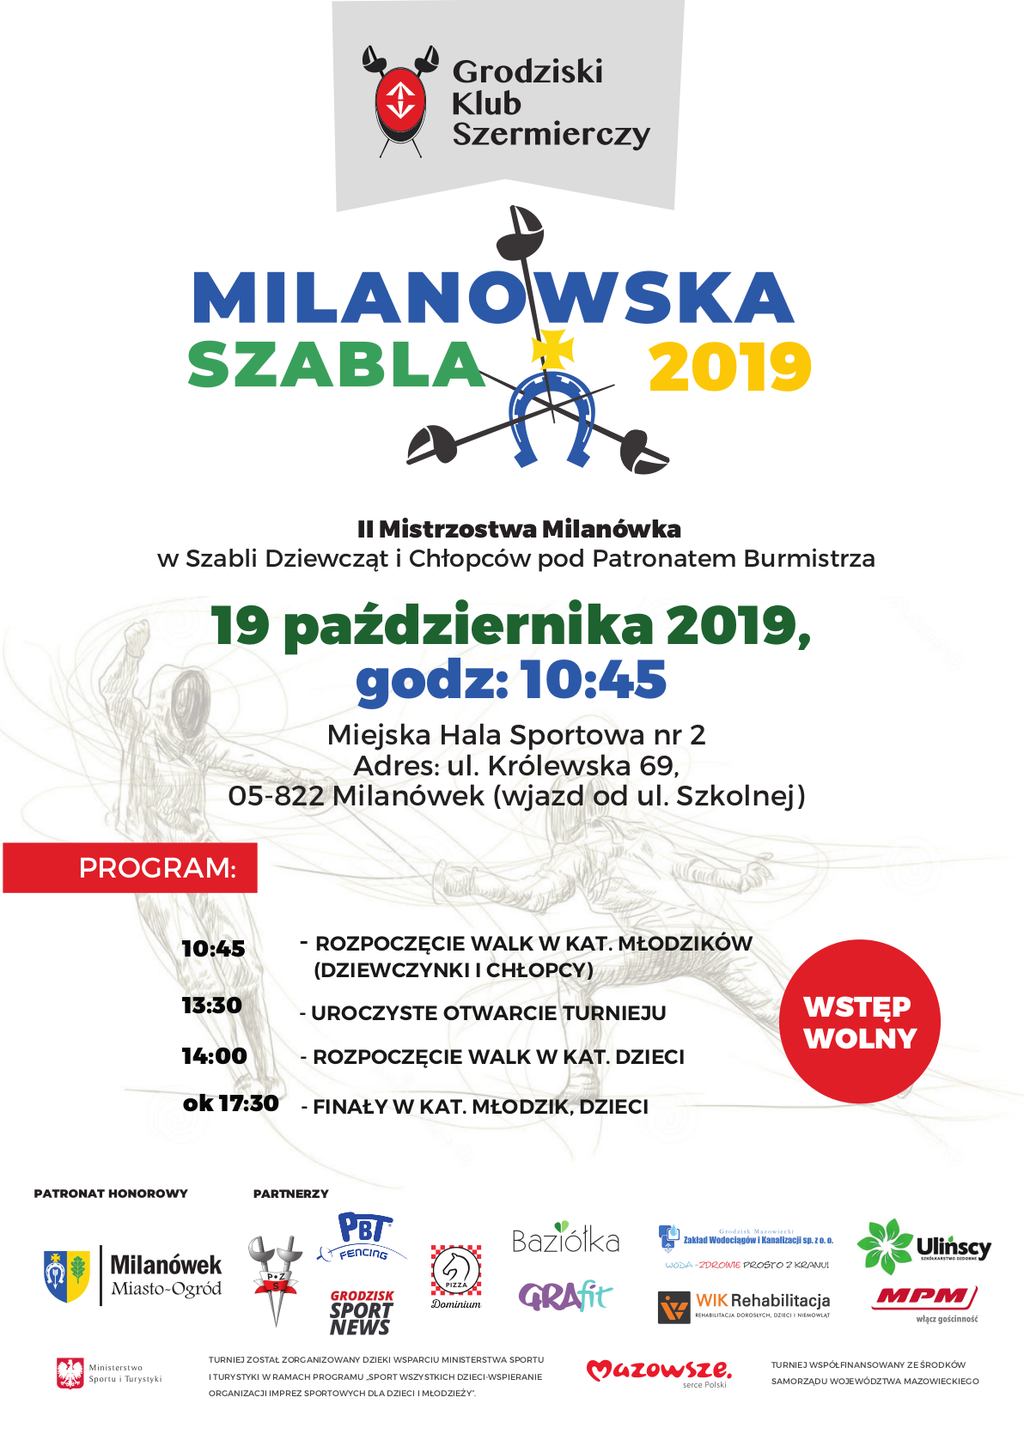 Milanowska Szabla 2019